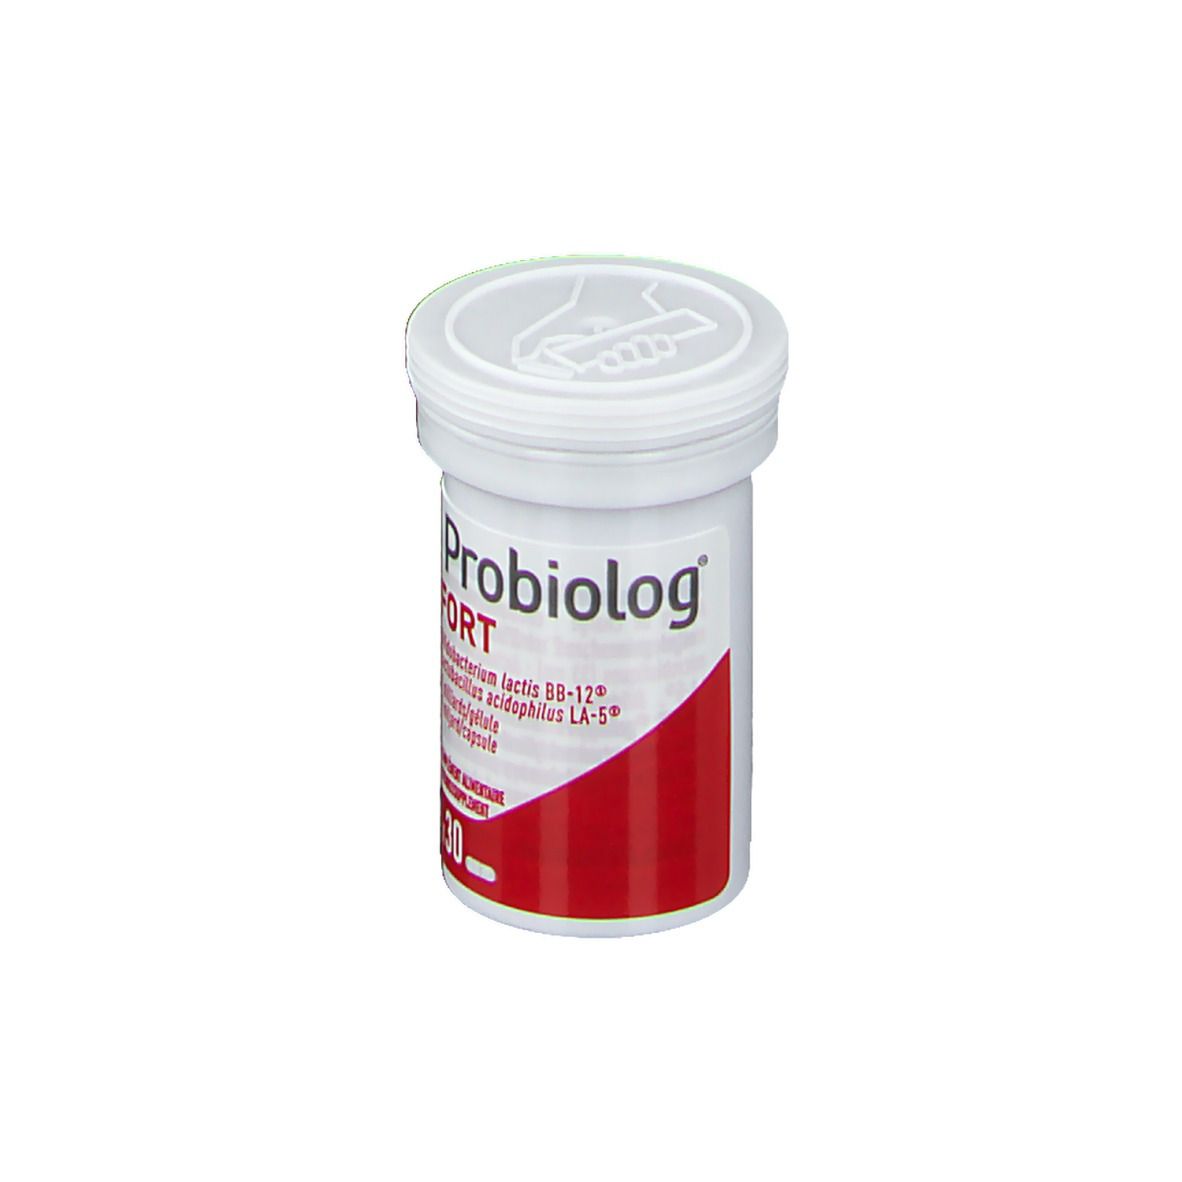 Probiolog® Fort  shoppharmacie.fr